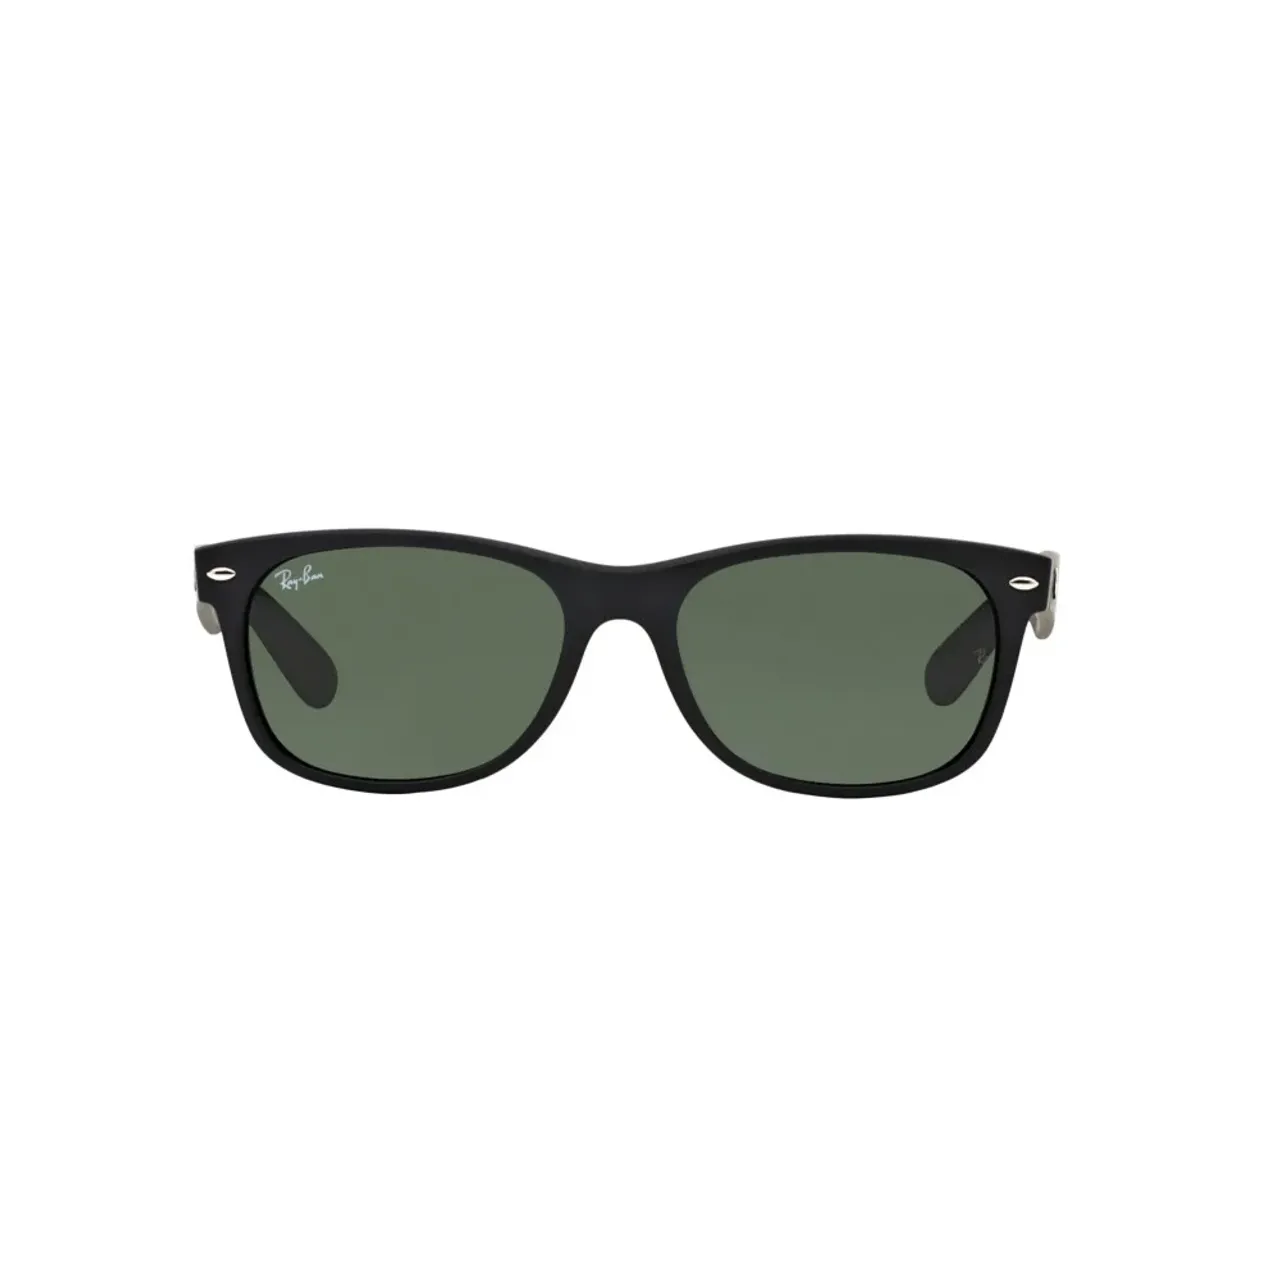 Ray-Ban , New Wayfarer Sunglasses in Black with Green Lenses ,Black unisex, Sizes: